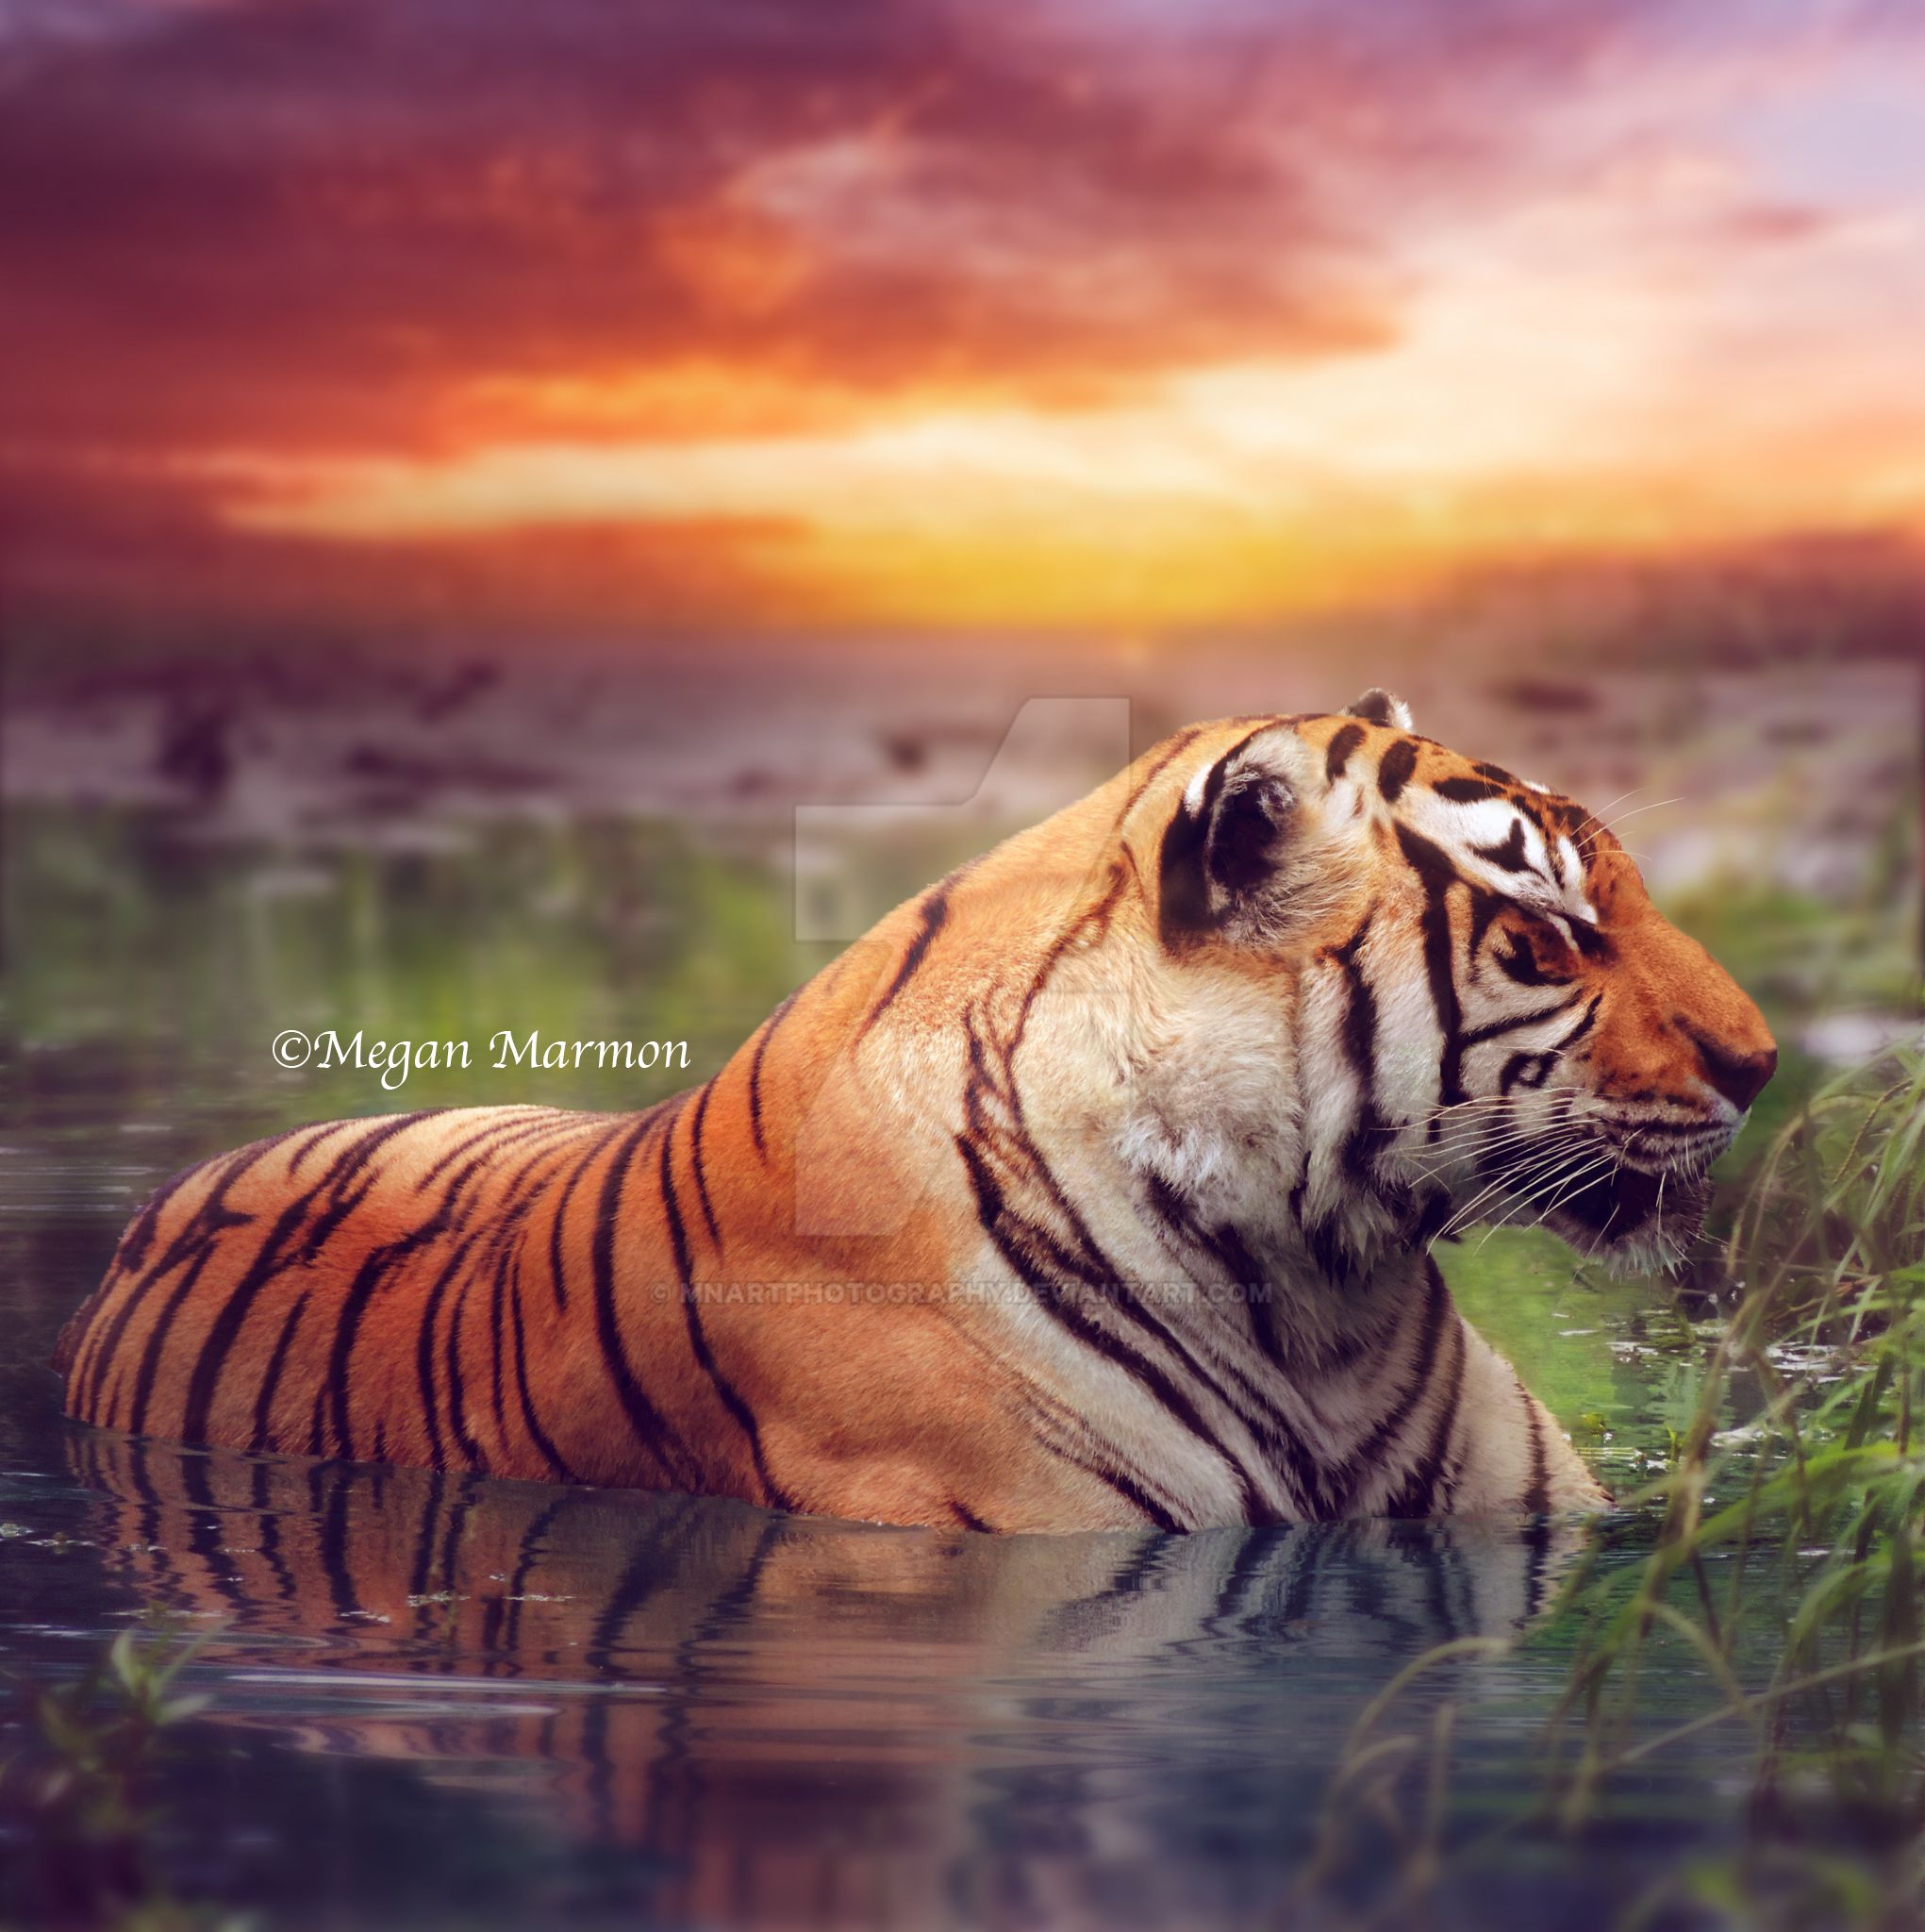 tigersunset_by_mnartphotography-dakm03k.jpg